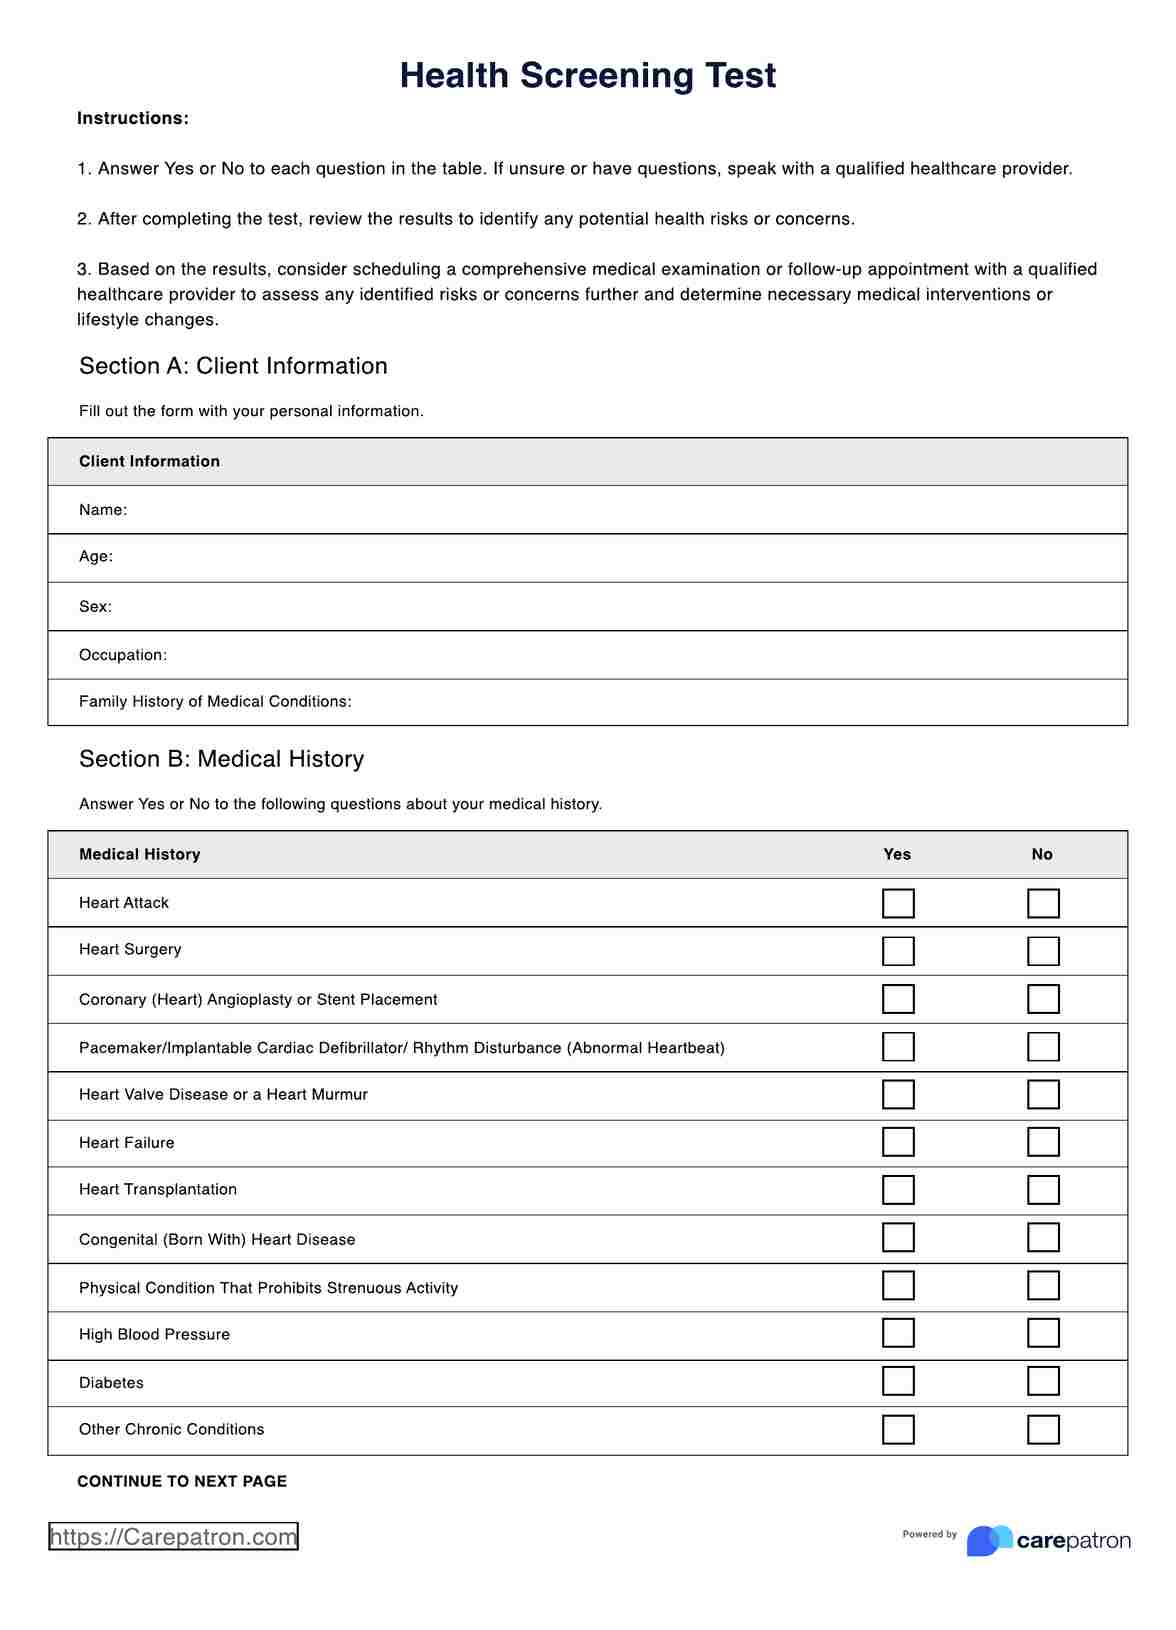 Health Screening Test PDF Example